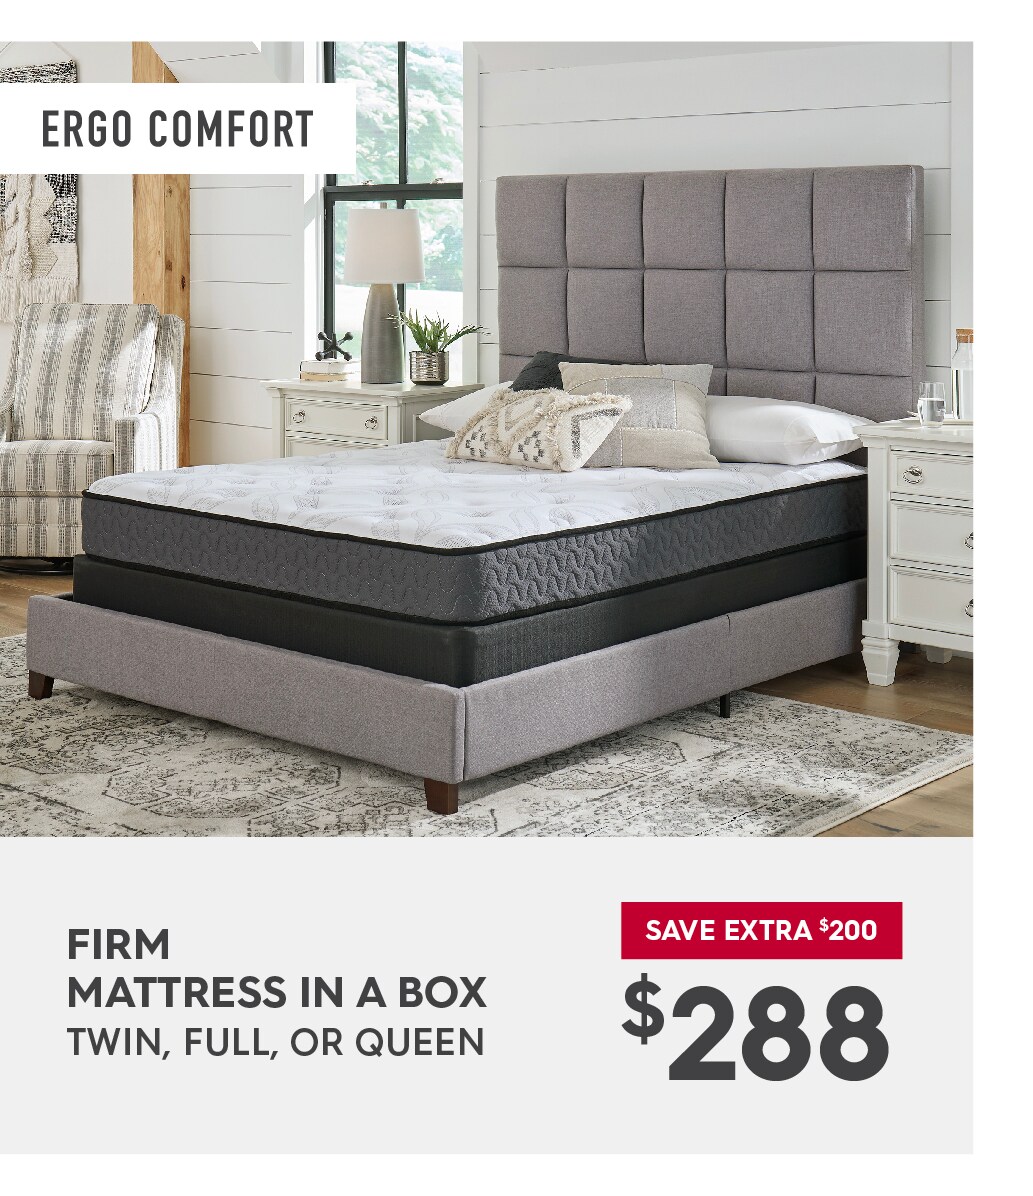 Shop the Ergo comfort firm deals.